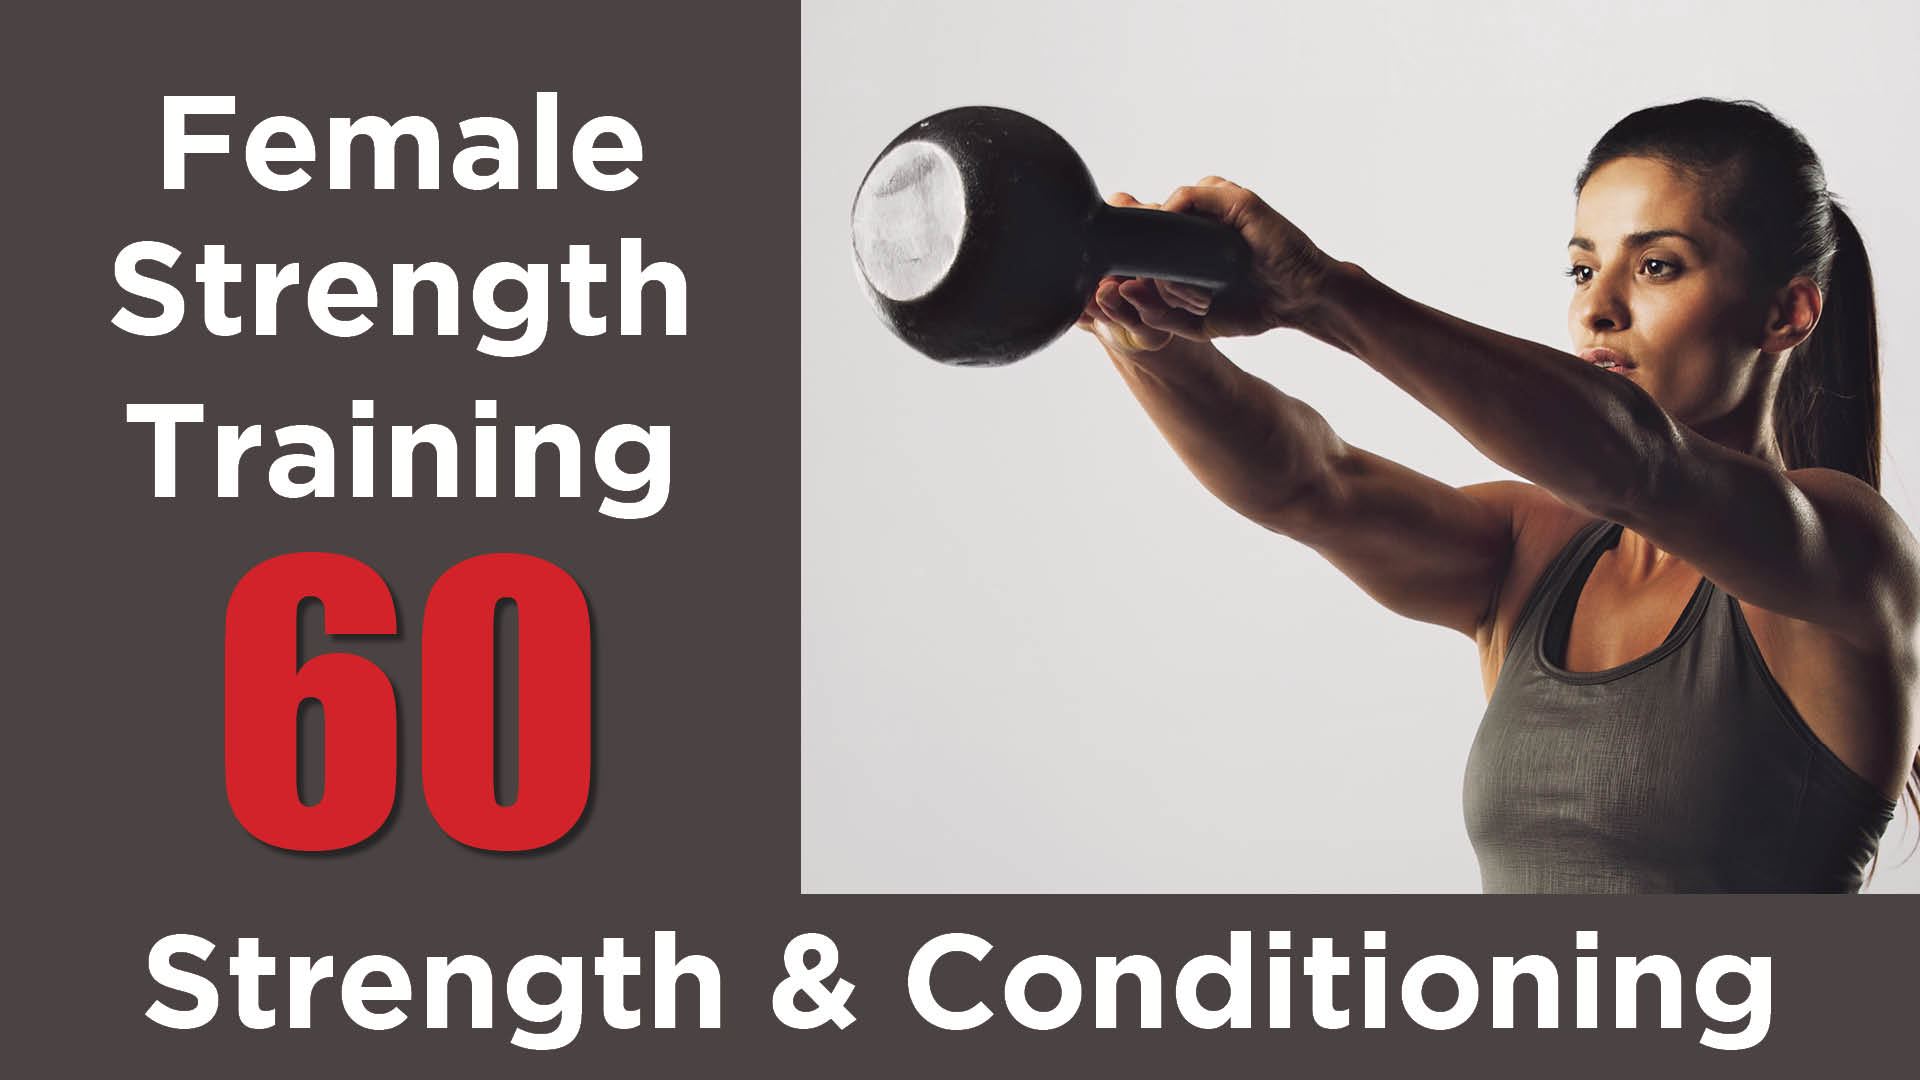 Female Strength Training 60